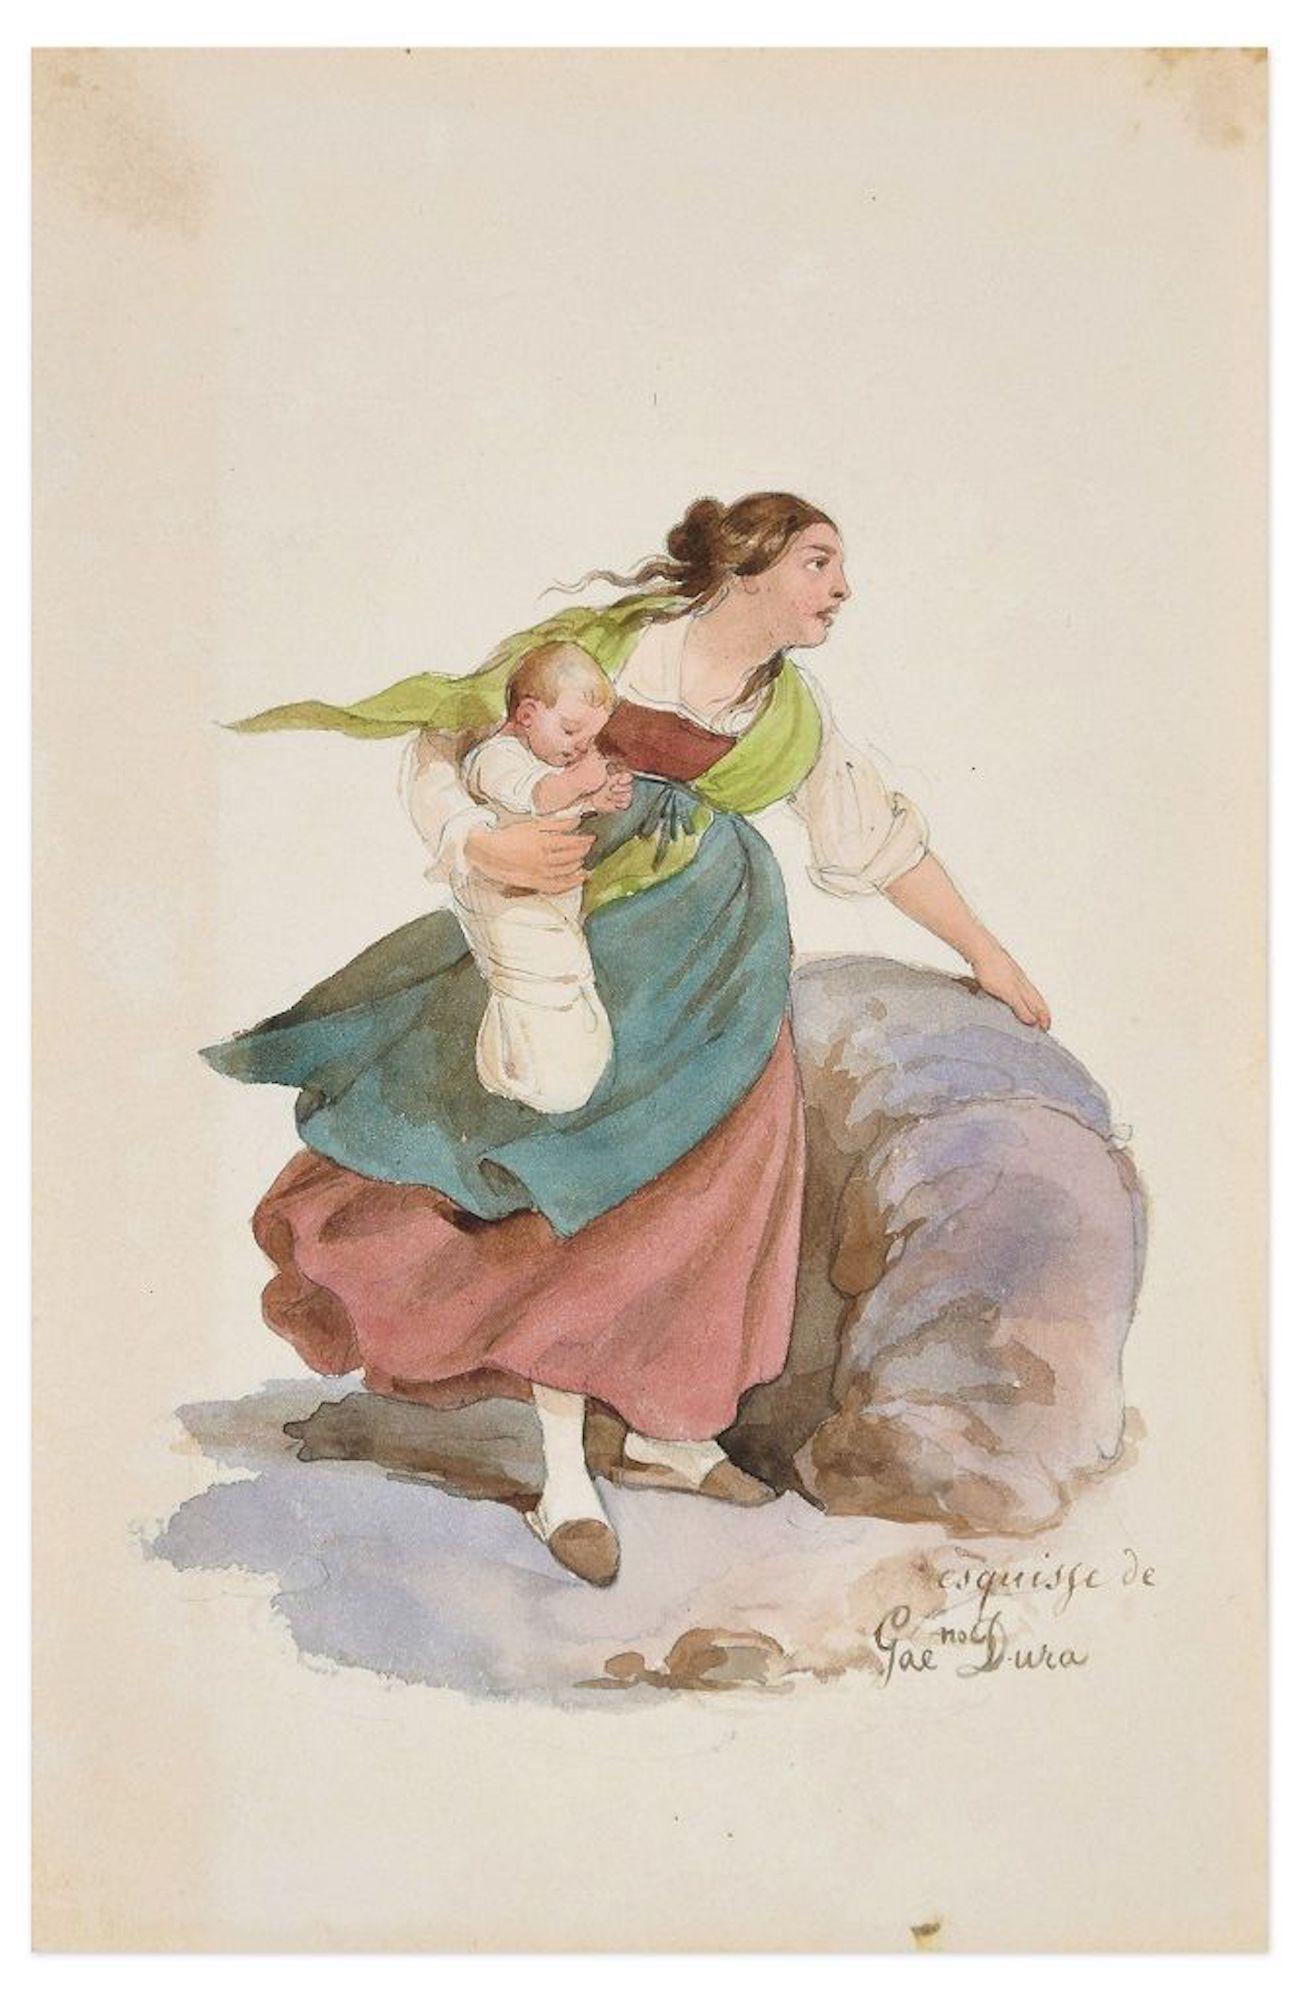 Gaetano Dura Figurative Art - Woman - Original Ink Drawing and Watercolor by G. Dura - 19th Century